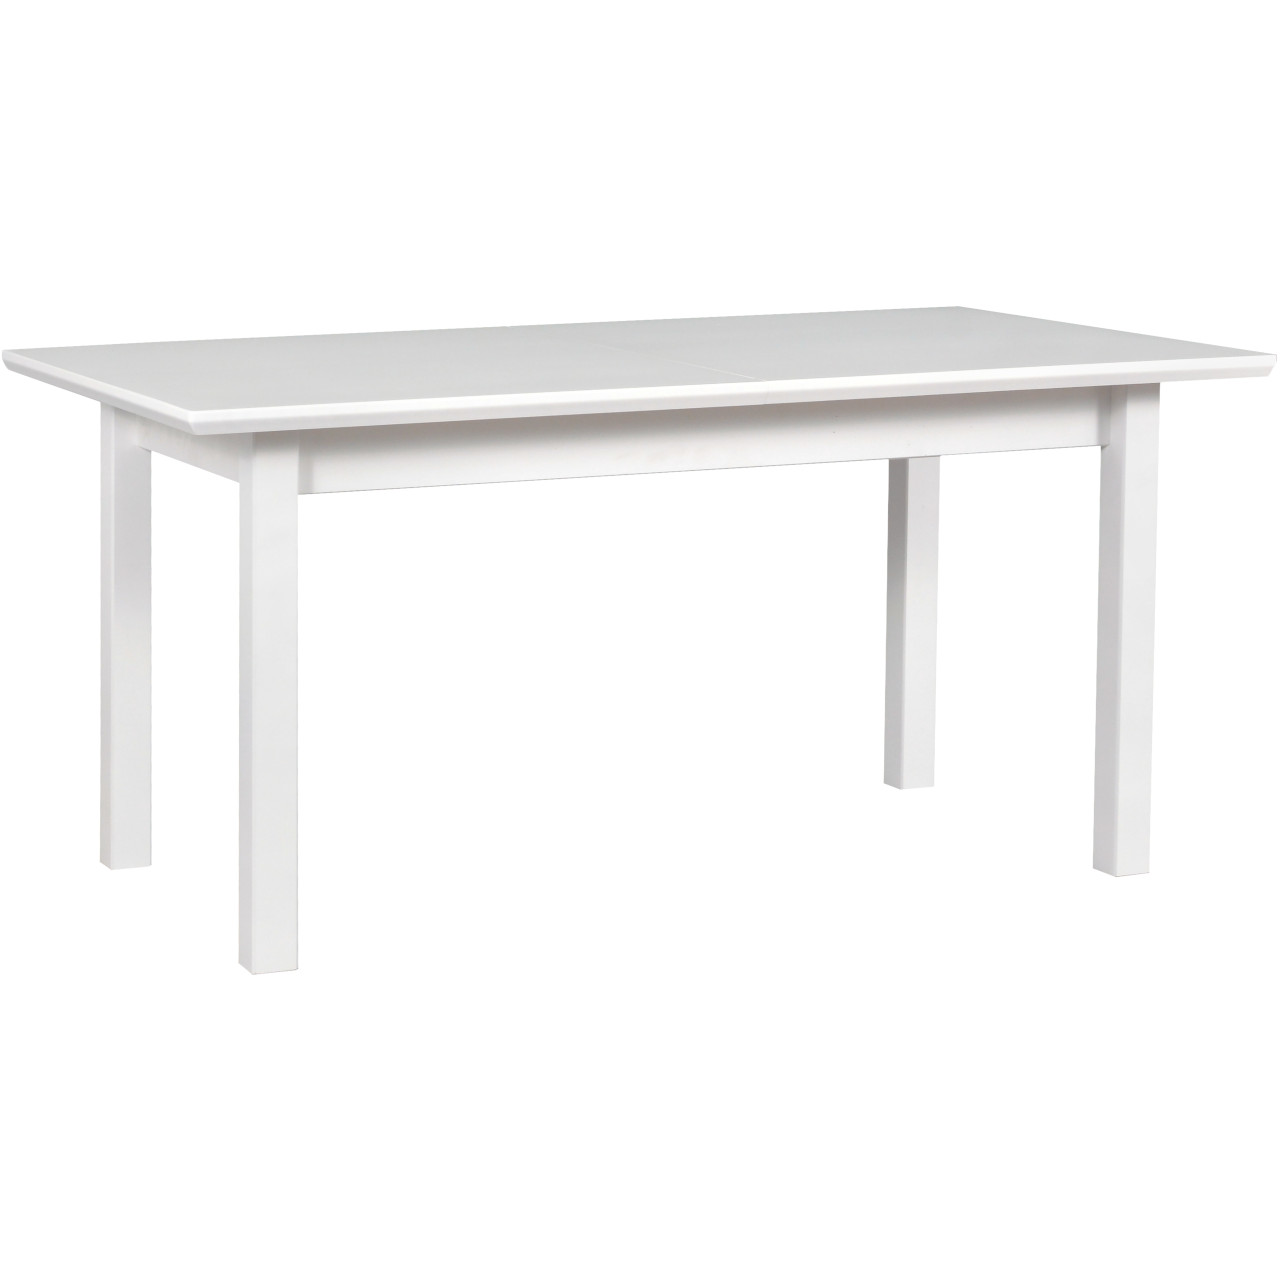 Table WENUS 5 L S 90x160/240 white MDF